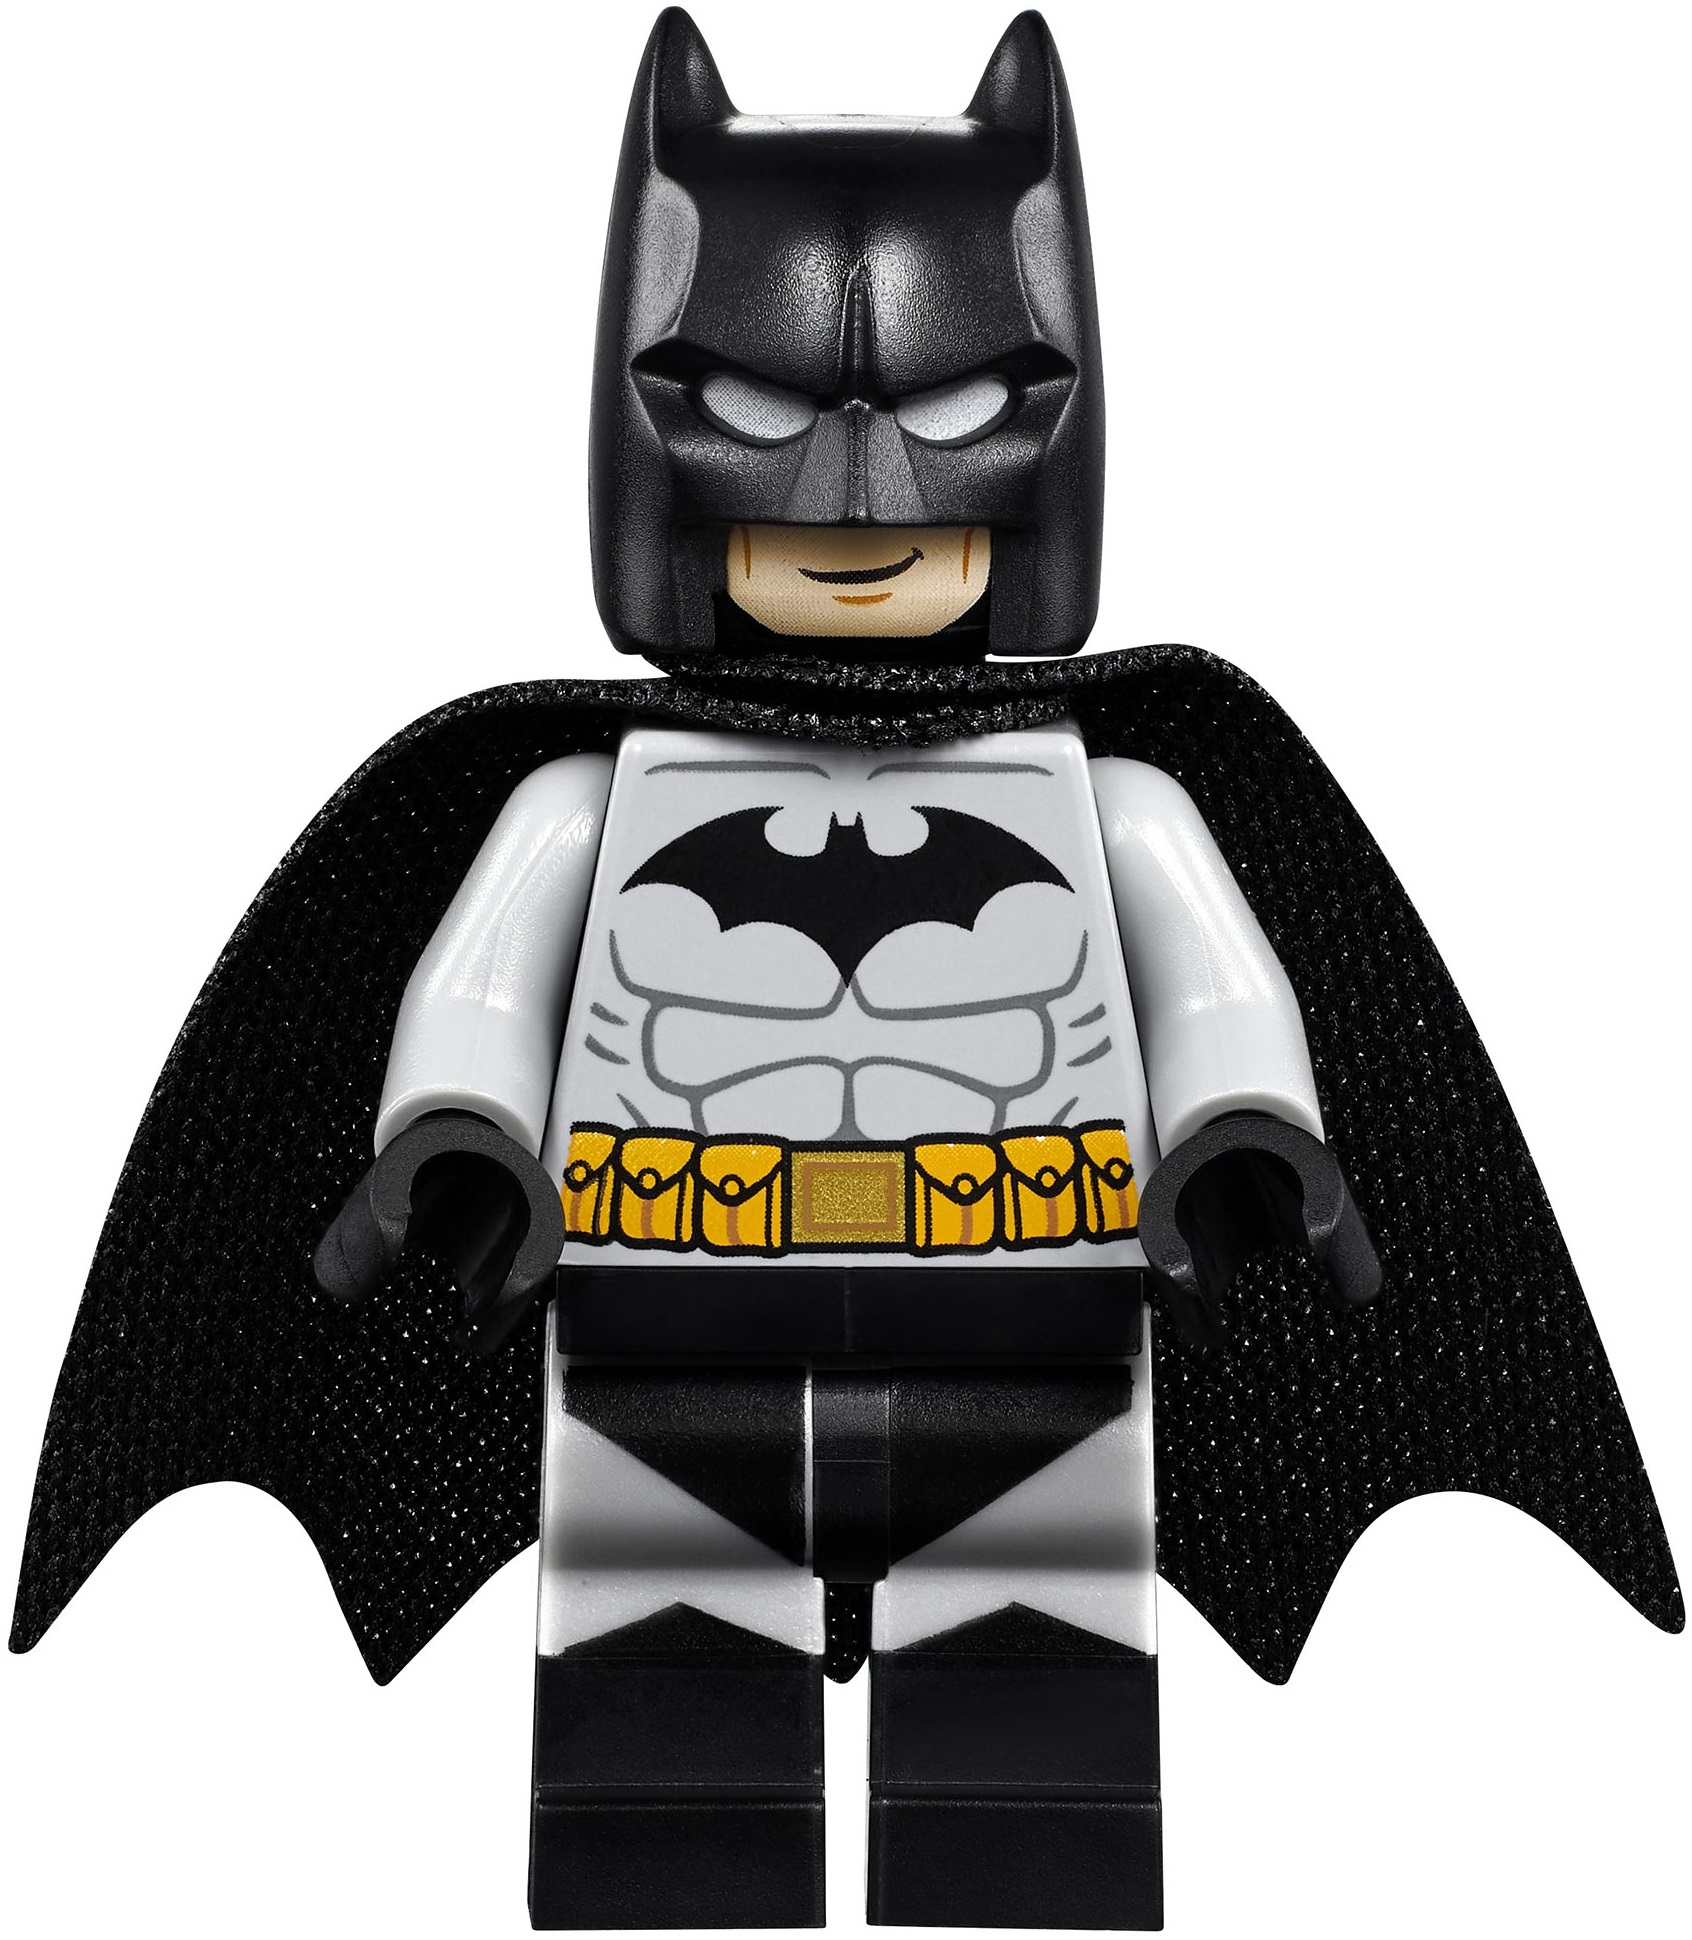 Super Heroes DC LEGO minifigure Scuba Costume Gear Batman 76010